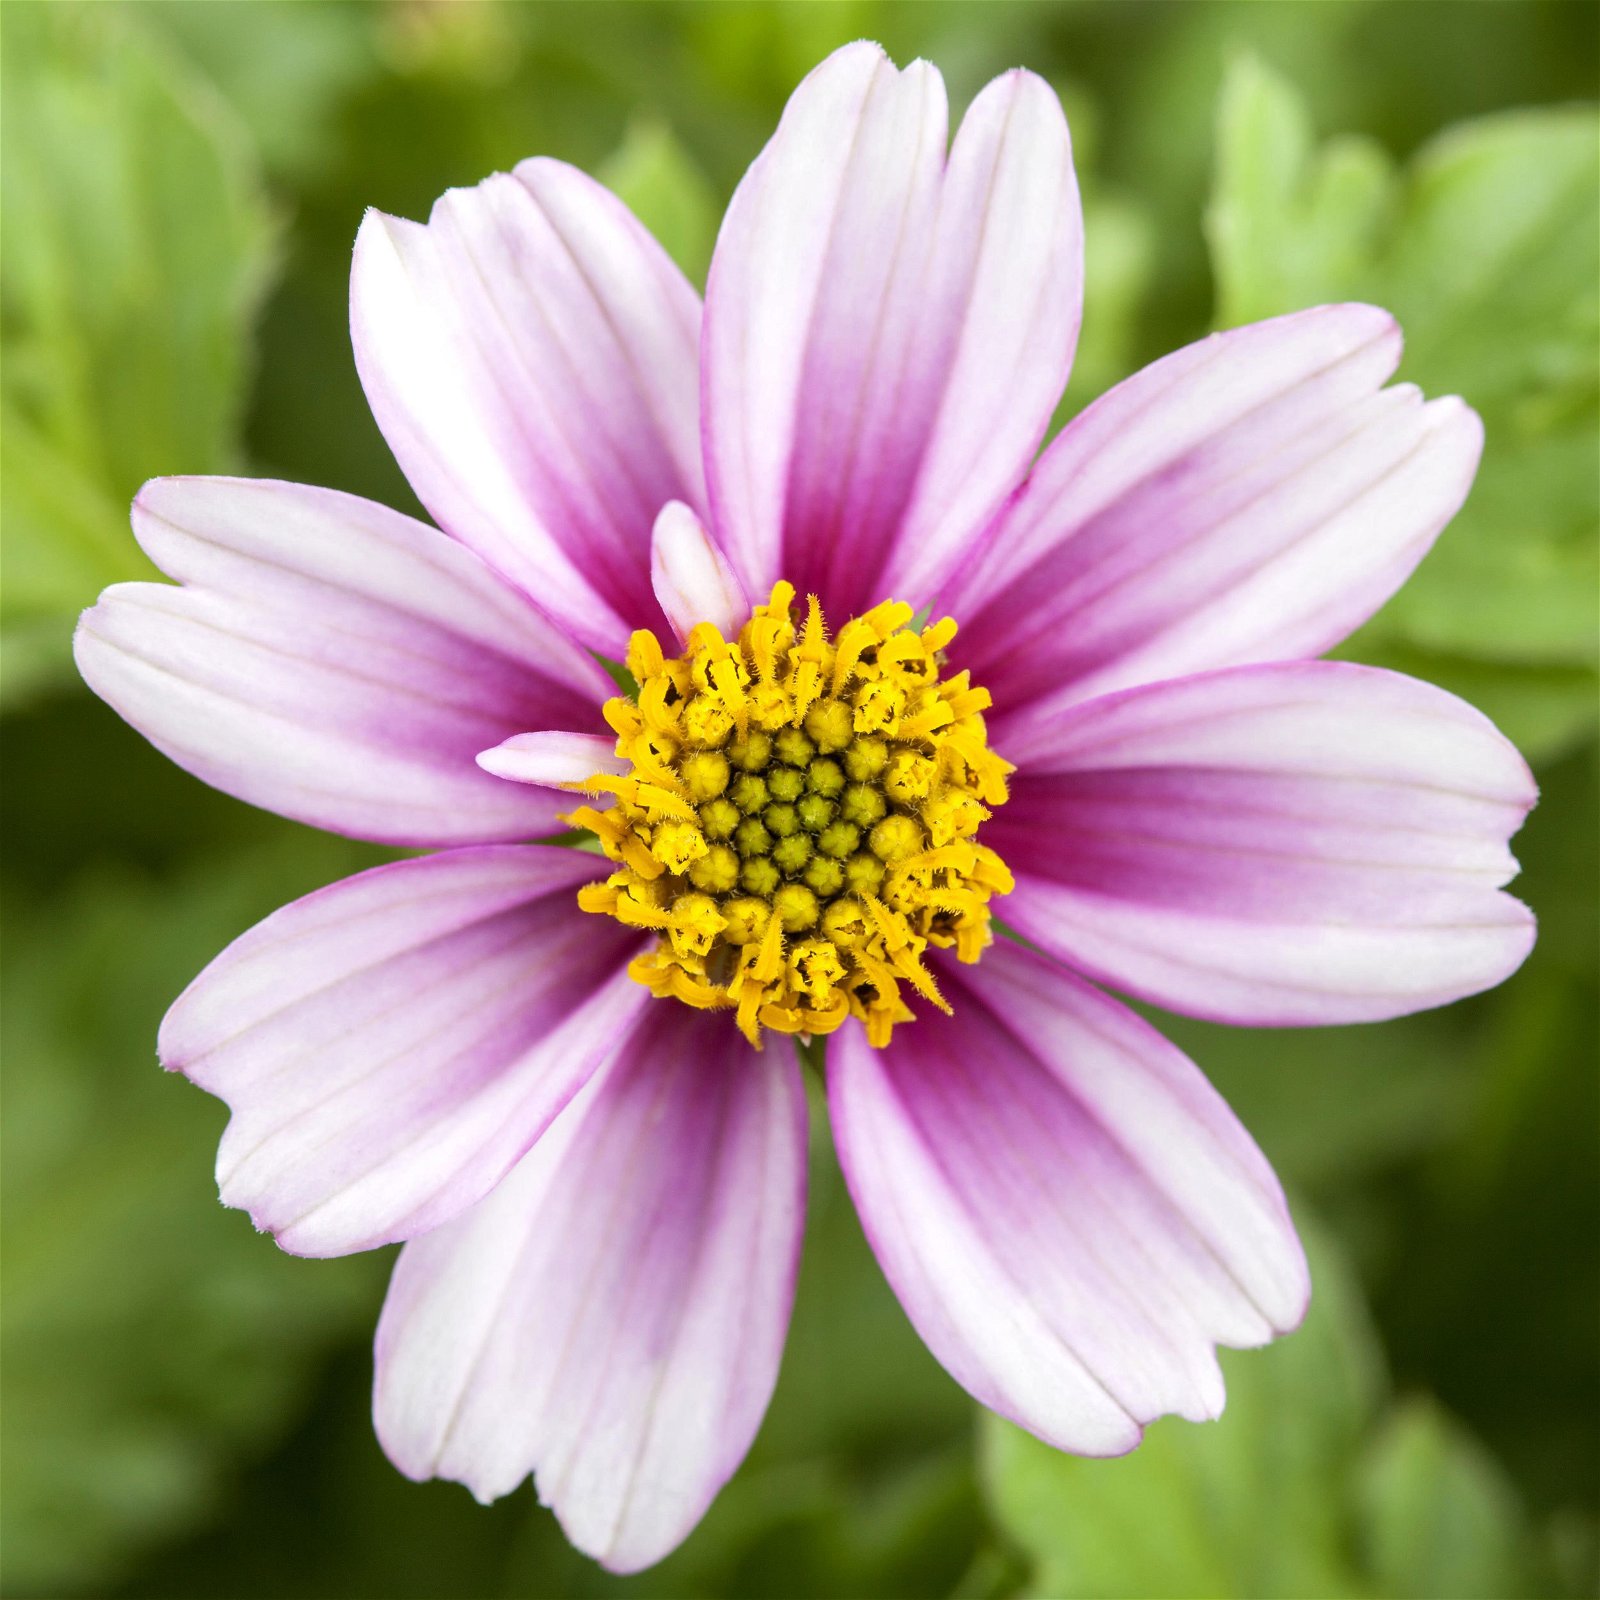 gemischte Sommerblumen-Ampel, rosa/pink, Ampeltopf-Ø 25/27 cm